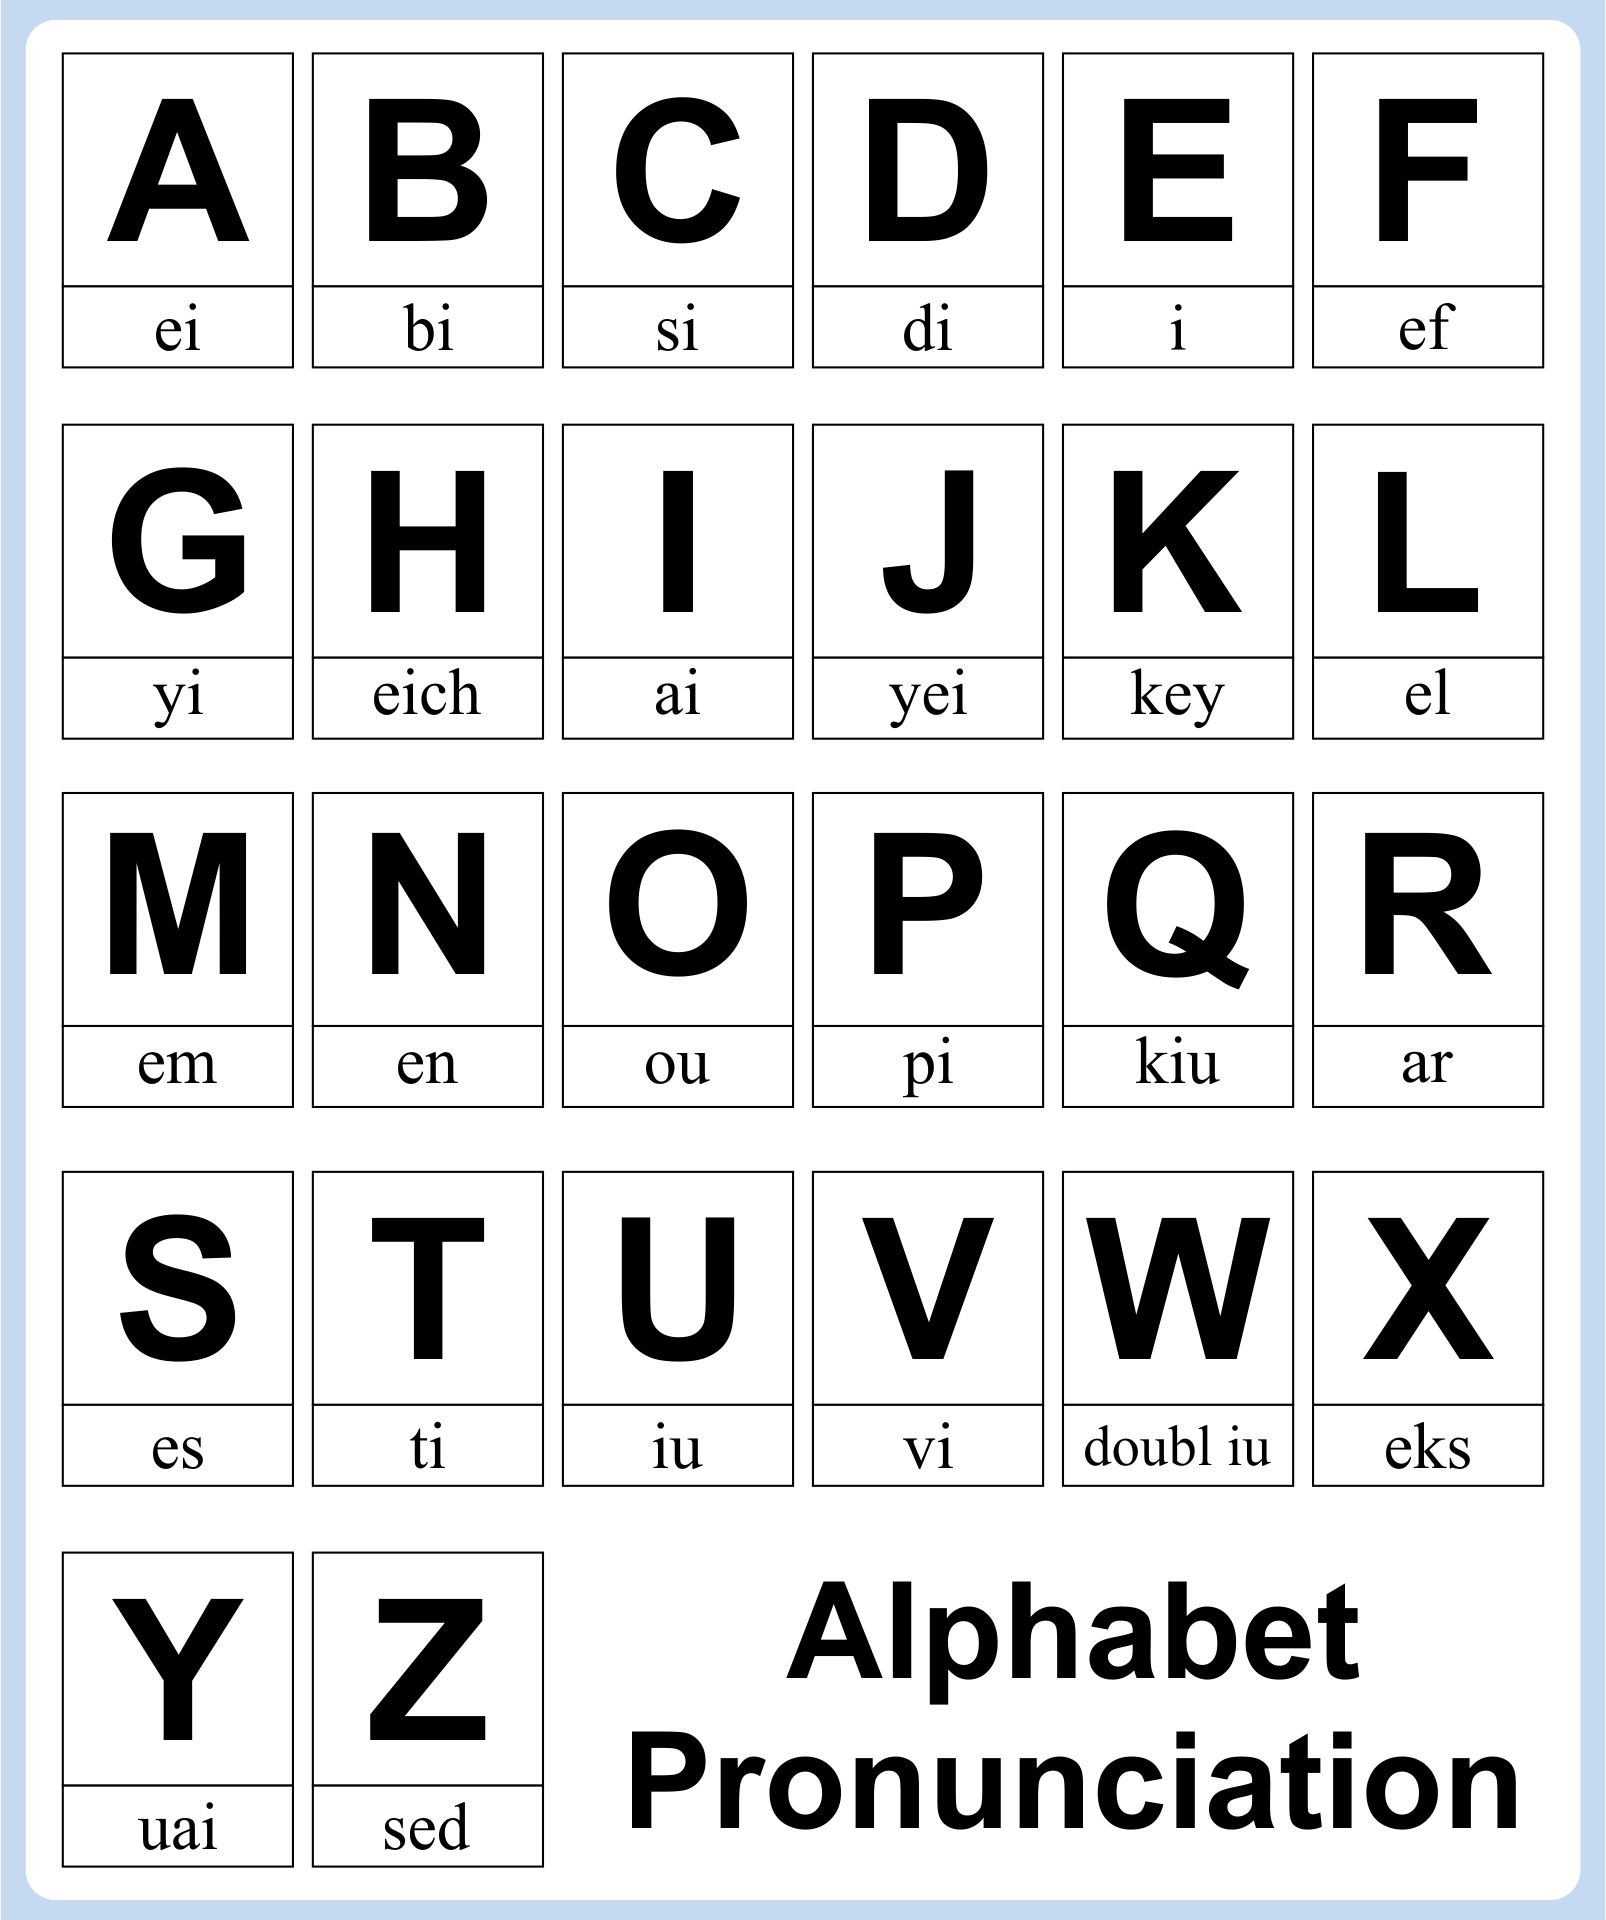 writing spelling words in alphabet order